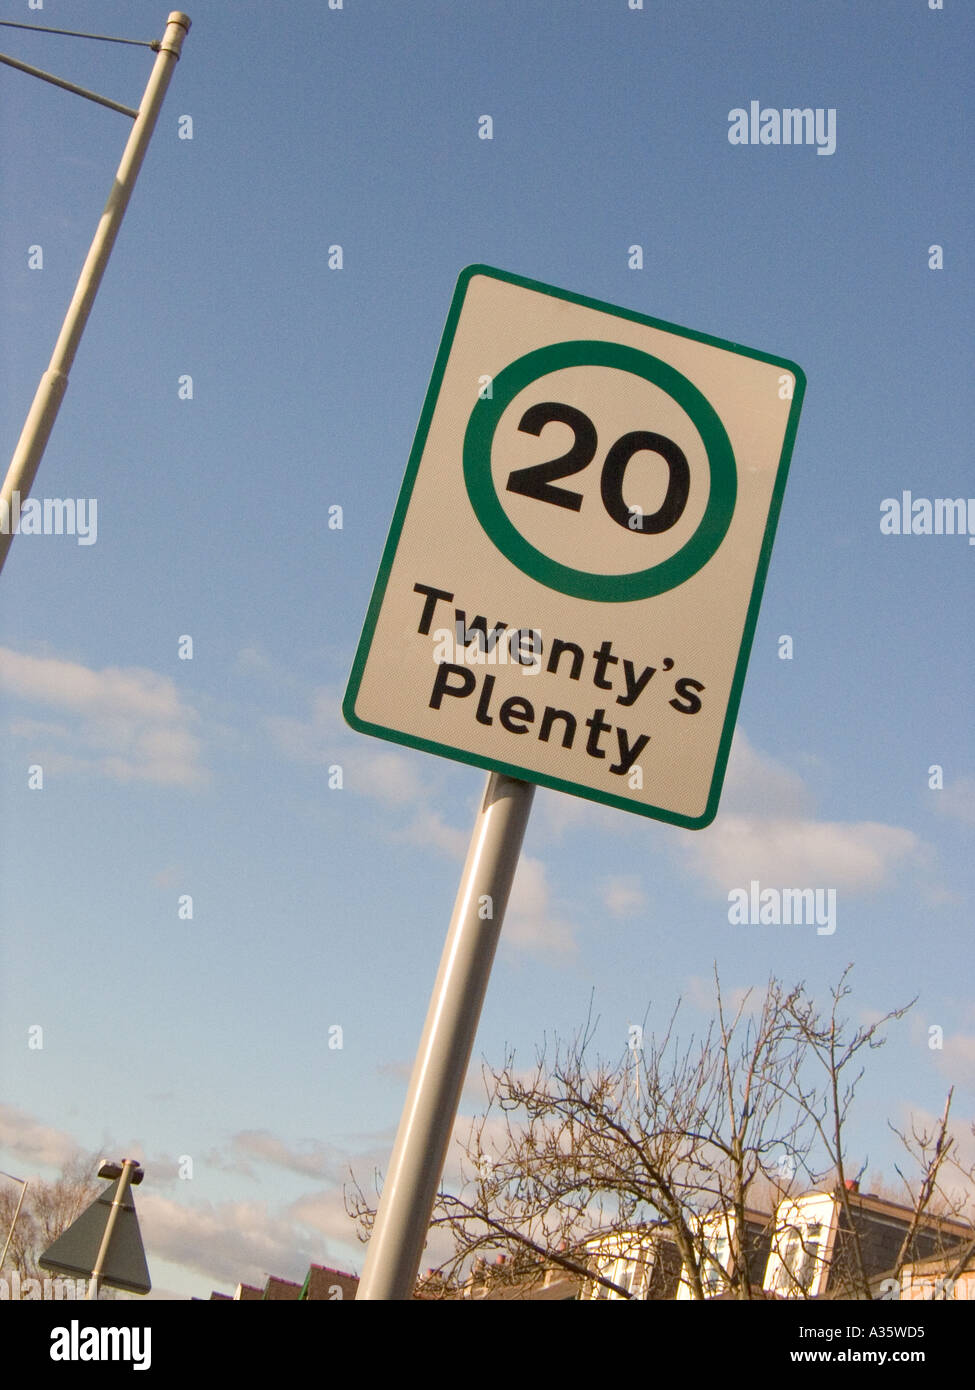 Twenty s plenty Speed limit 20 mph sign in Motherwell Scotland UK Stock Photo